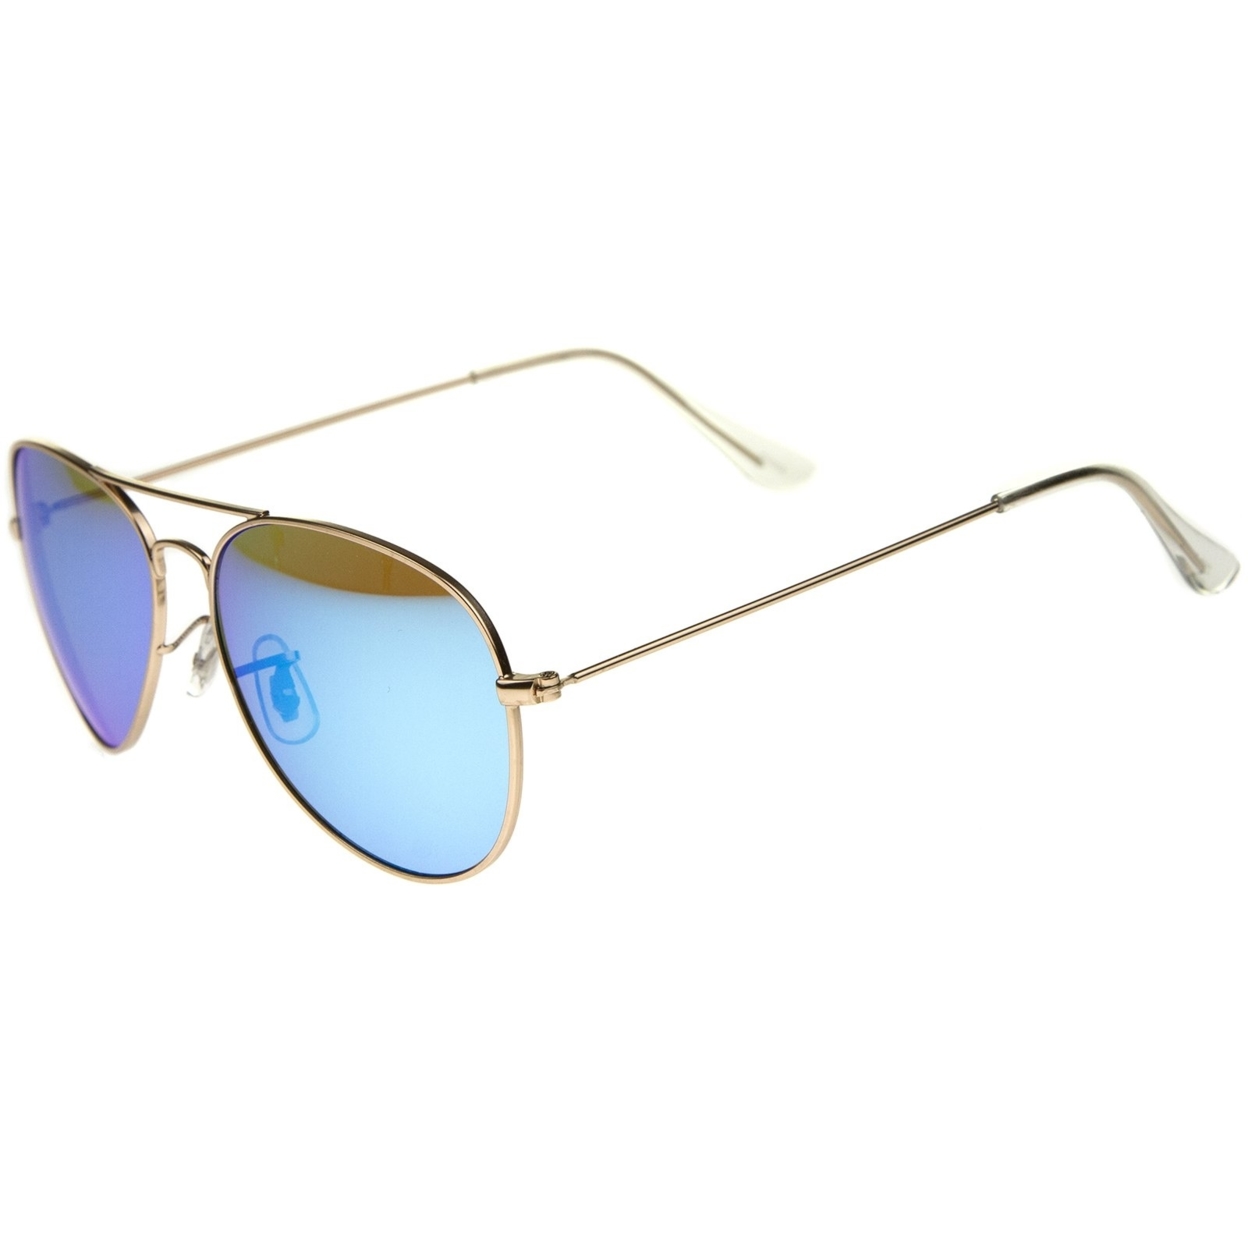 Premium Nickel Plated Frame Multi-Coated Mirror Lens Aviator Sunglasses 59mm - Gold / Red Mirror